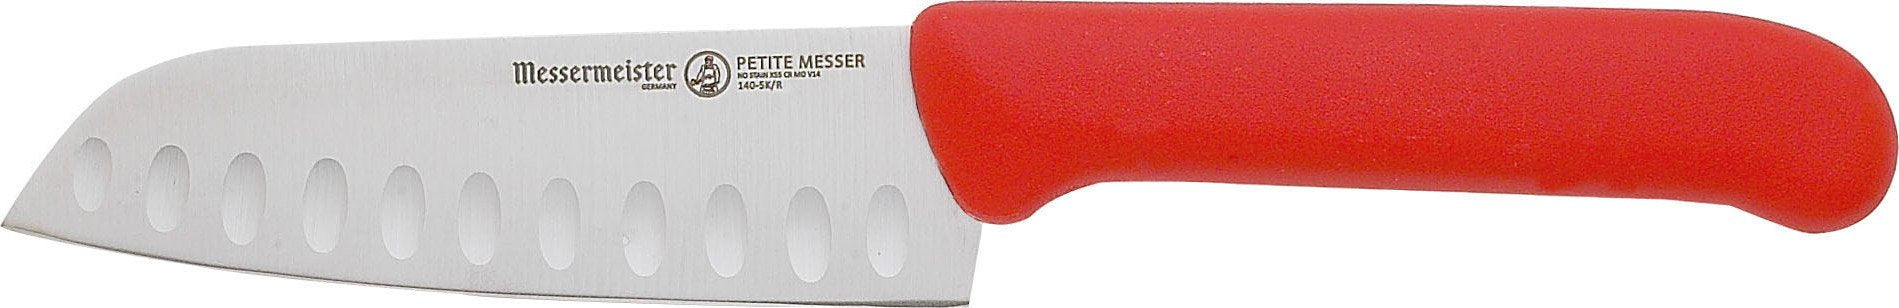 Messermeister - Red Petite Messer 5" Kullenschliff Santoku Knife - 140-5K/R